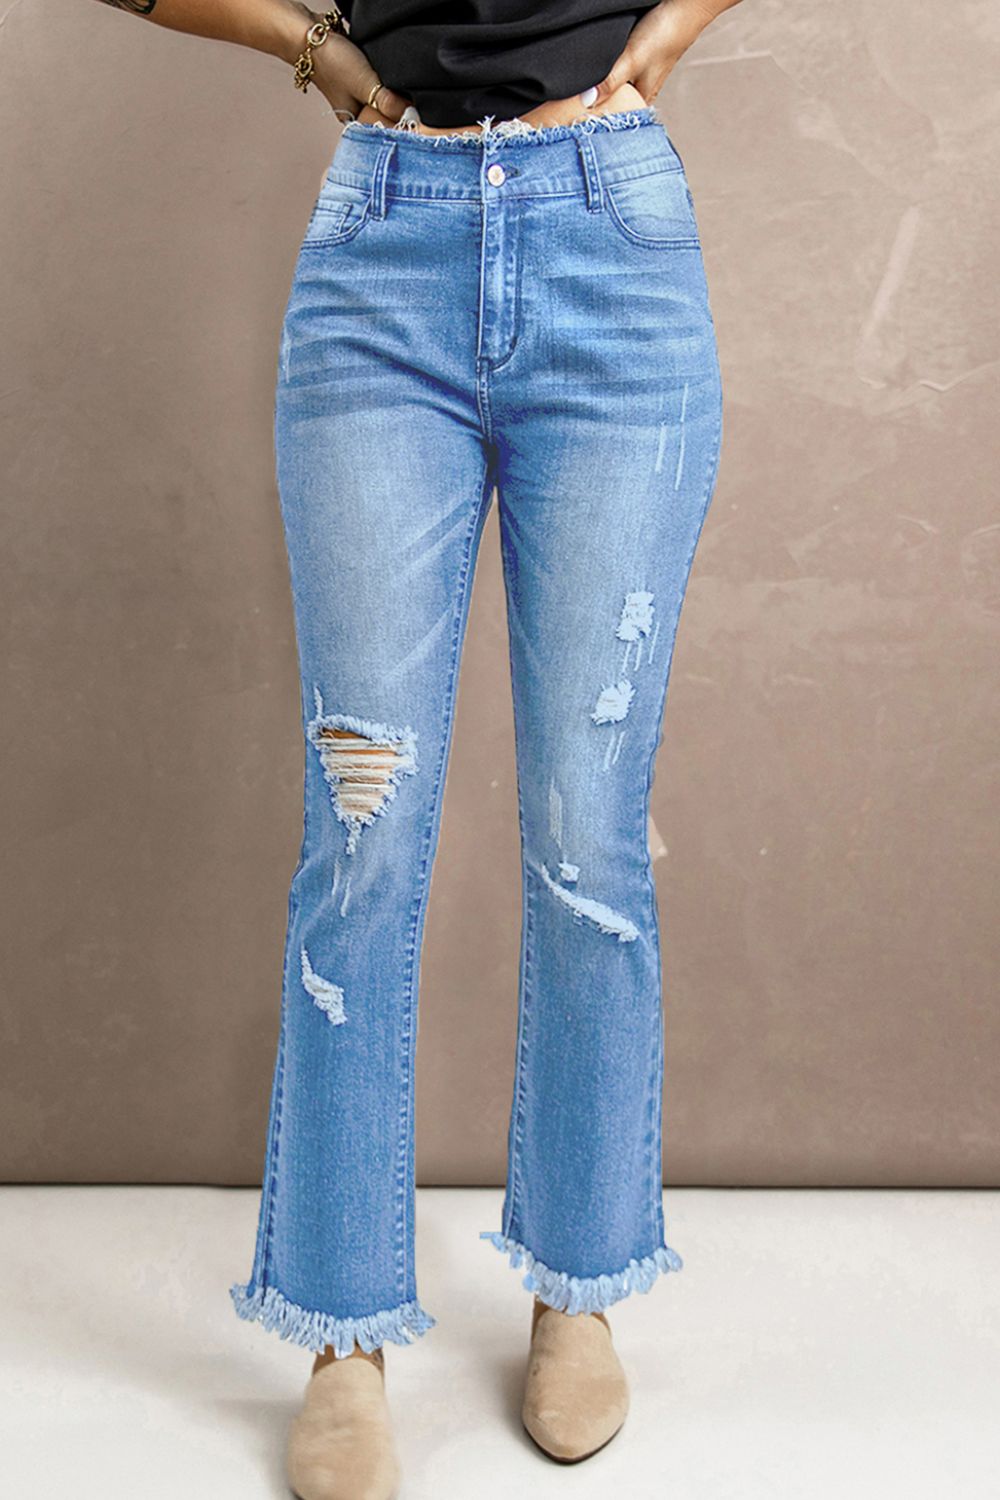 High Waist Distressed Raw Hem Jeans - Women & Men Fashion Store | JL Fashion Store